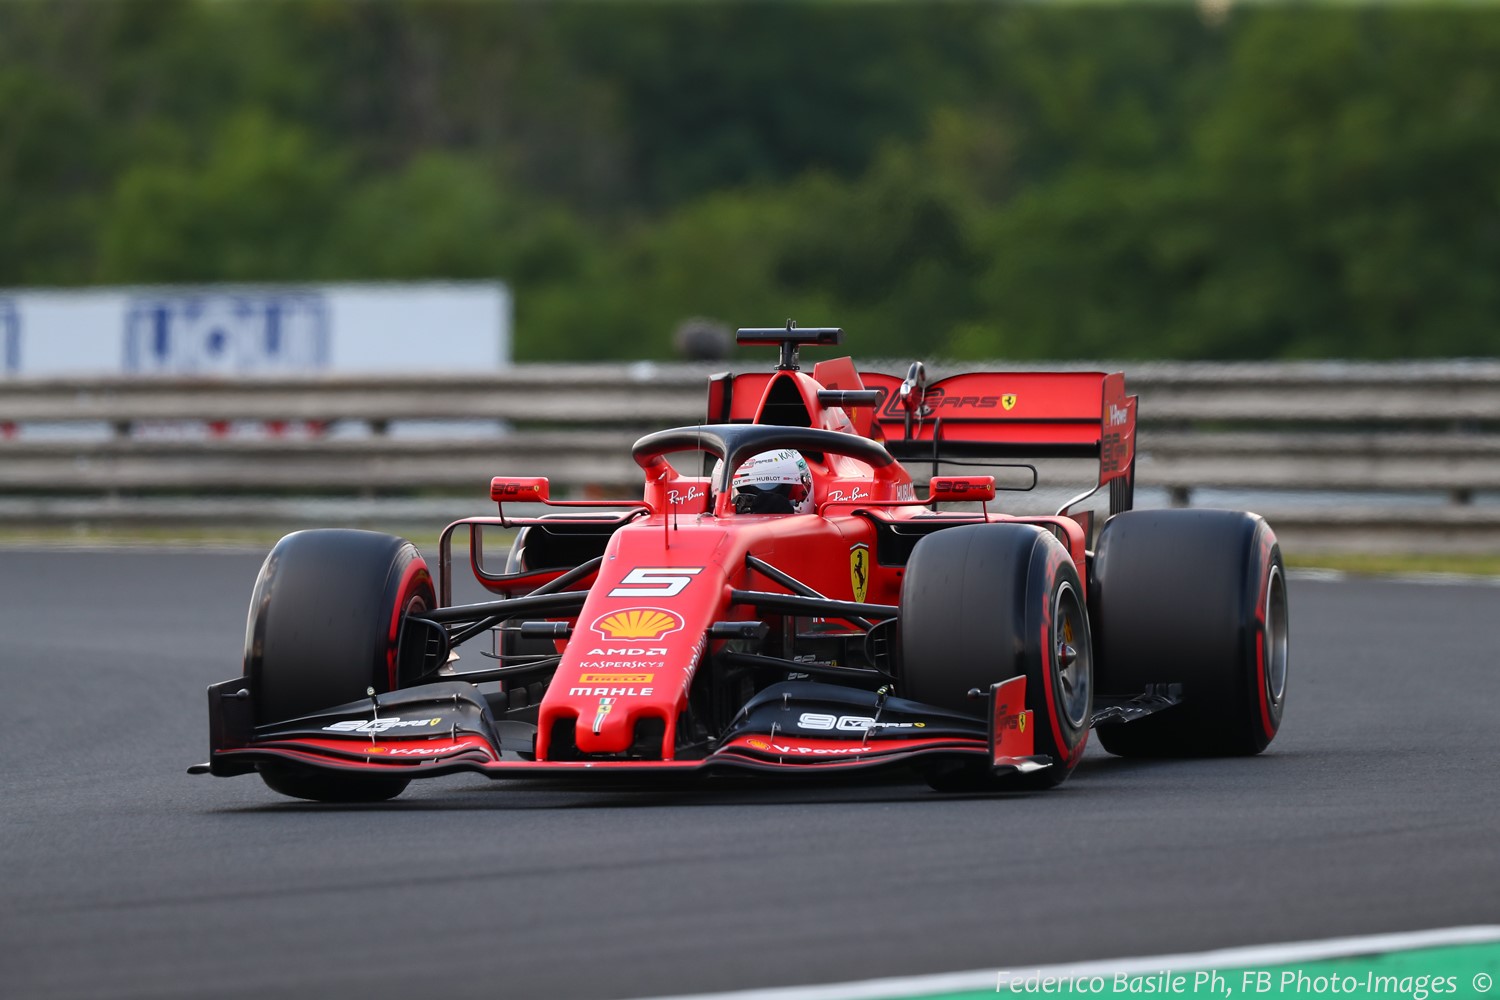 Sebastian Vettel stuck with having to drive Binotto's inferior car, which kills his motivation